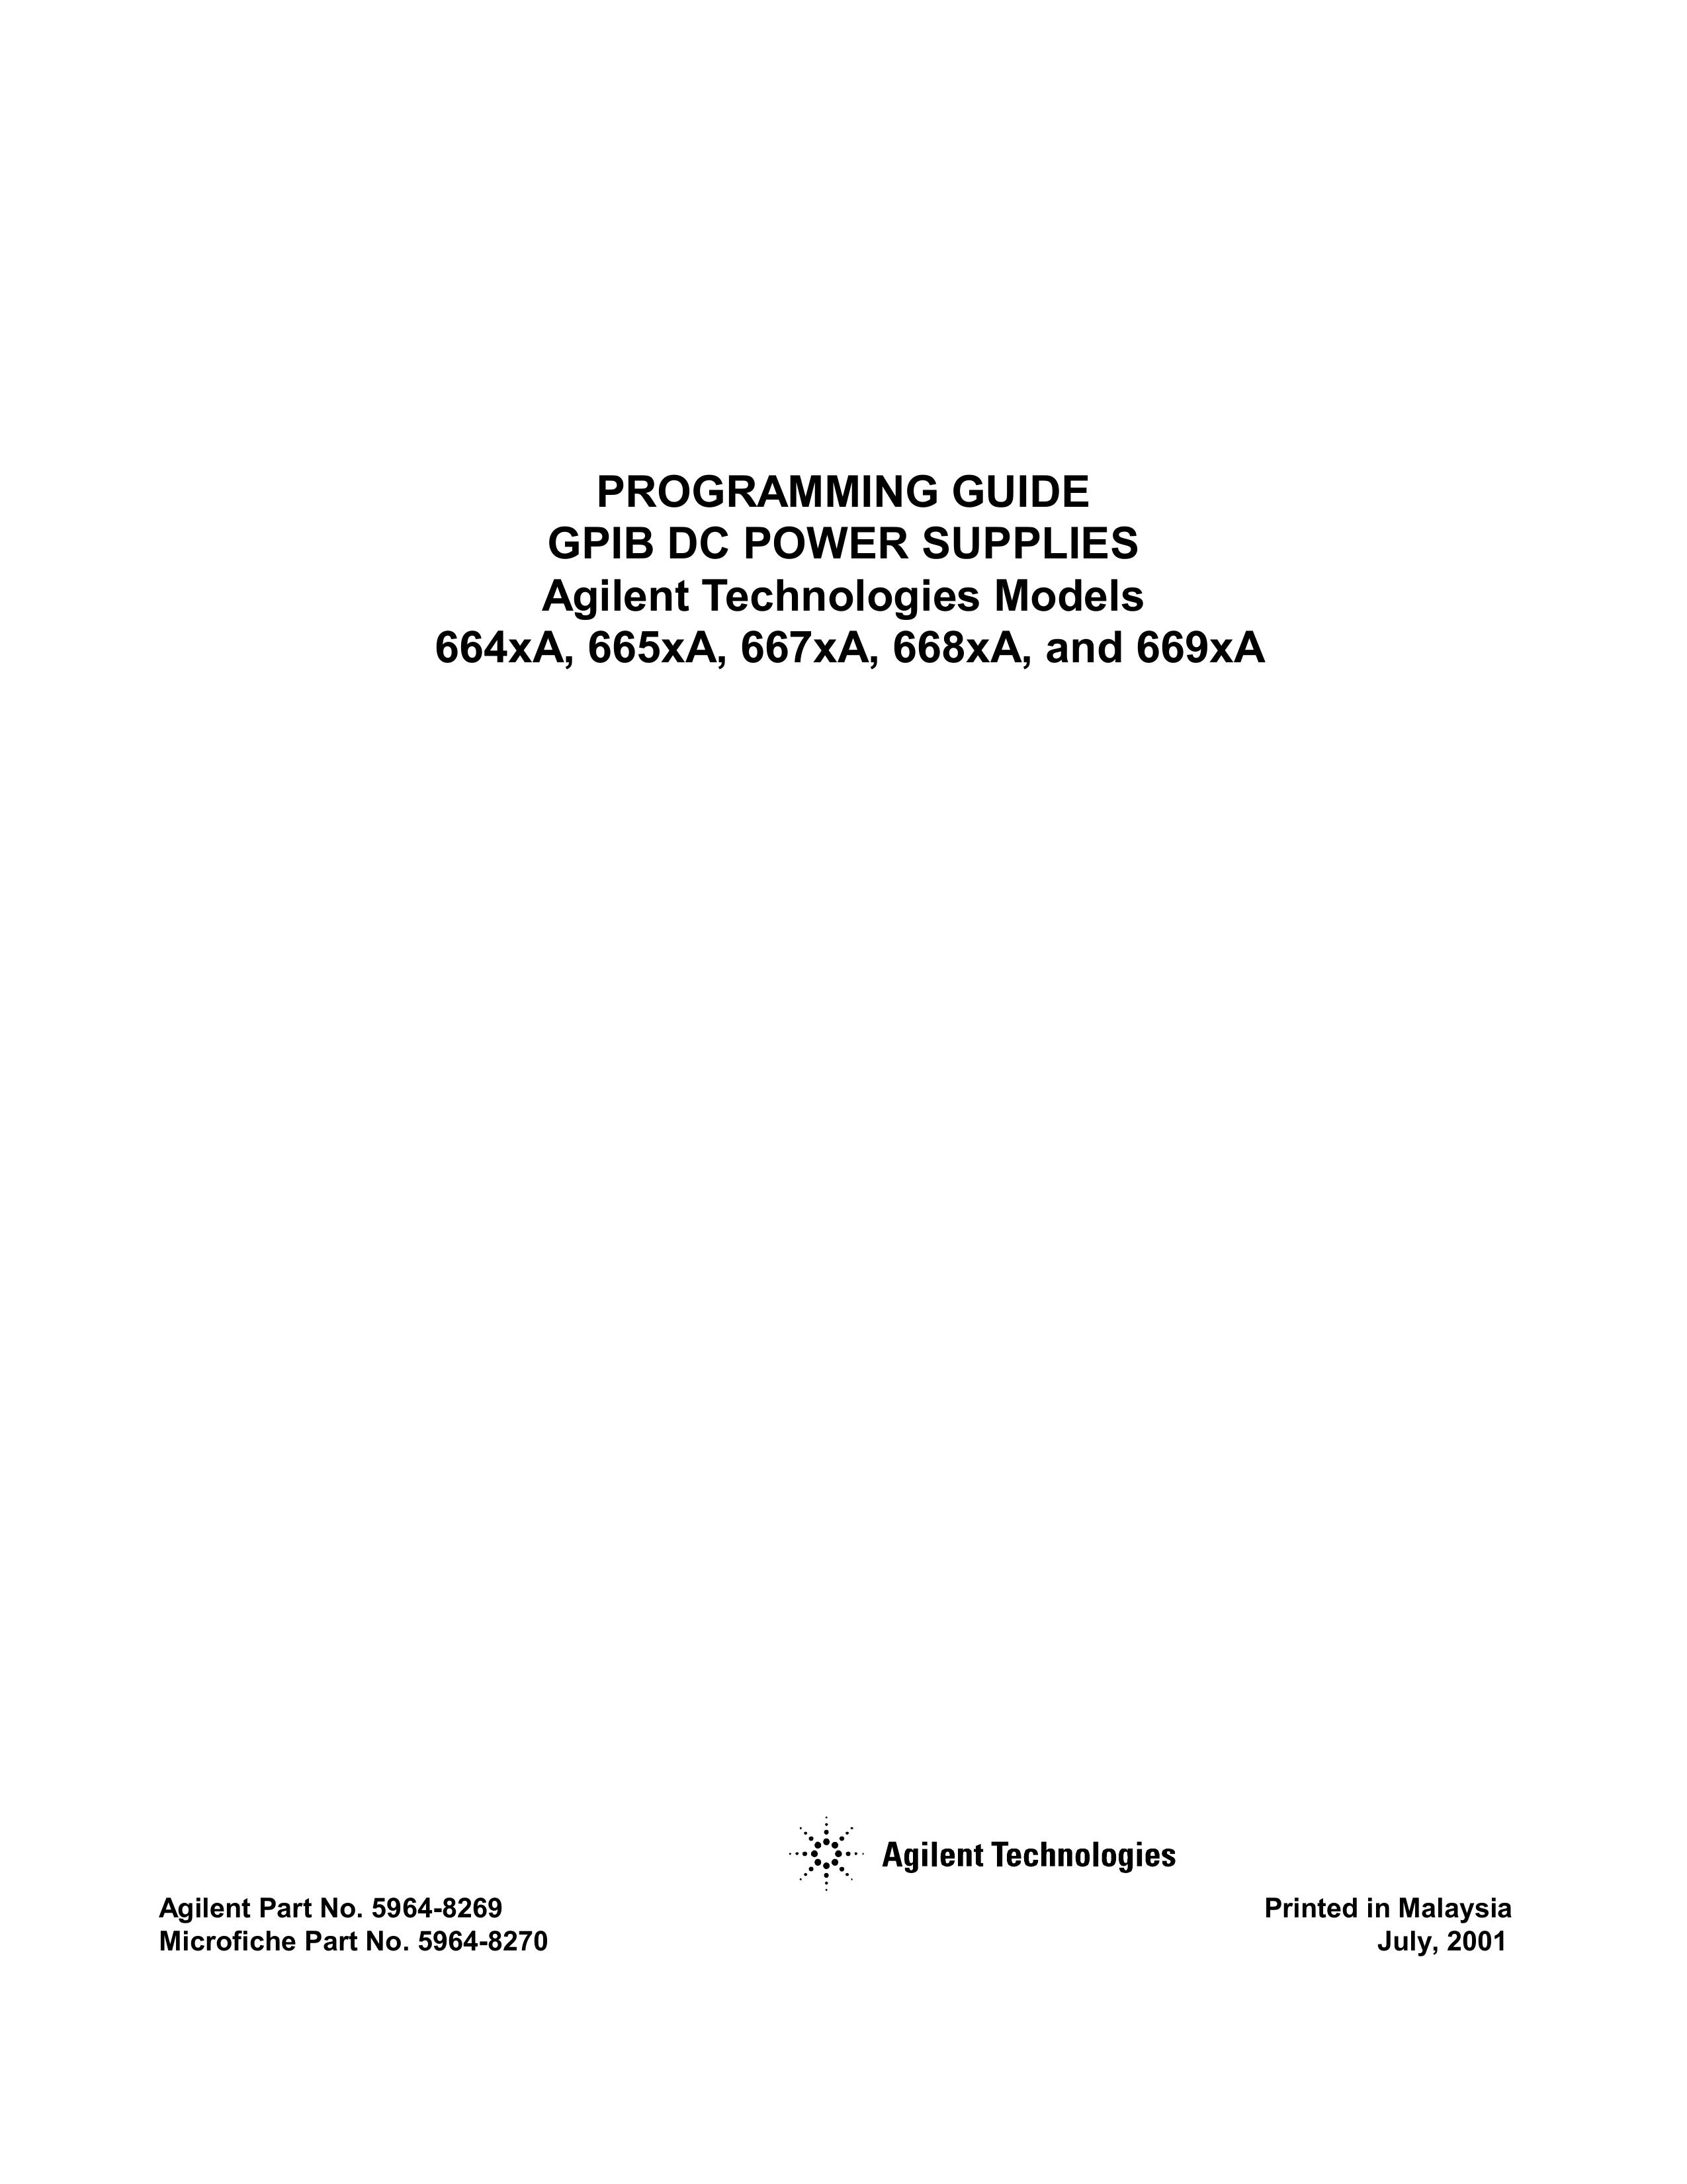 Agilent Technologies 664xA Portable Generator User Manual